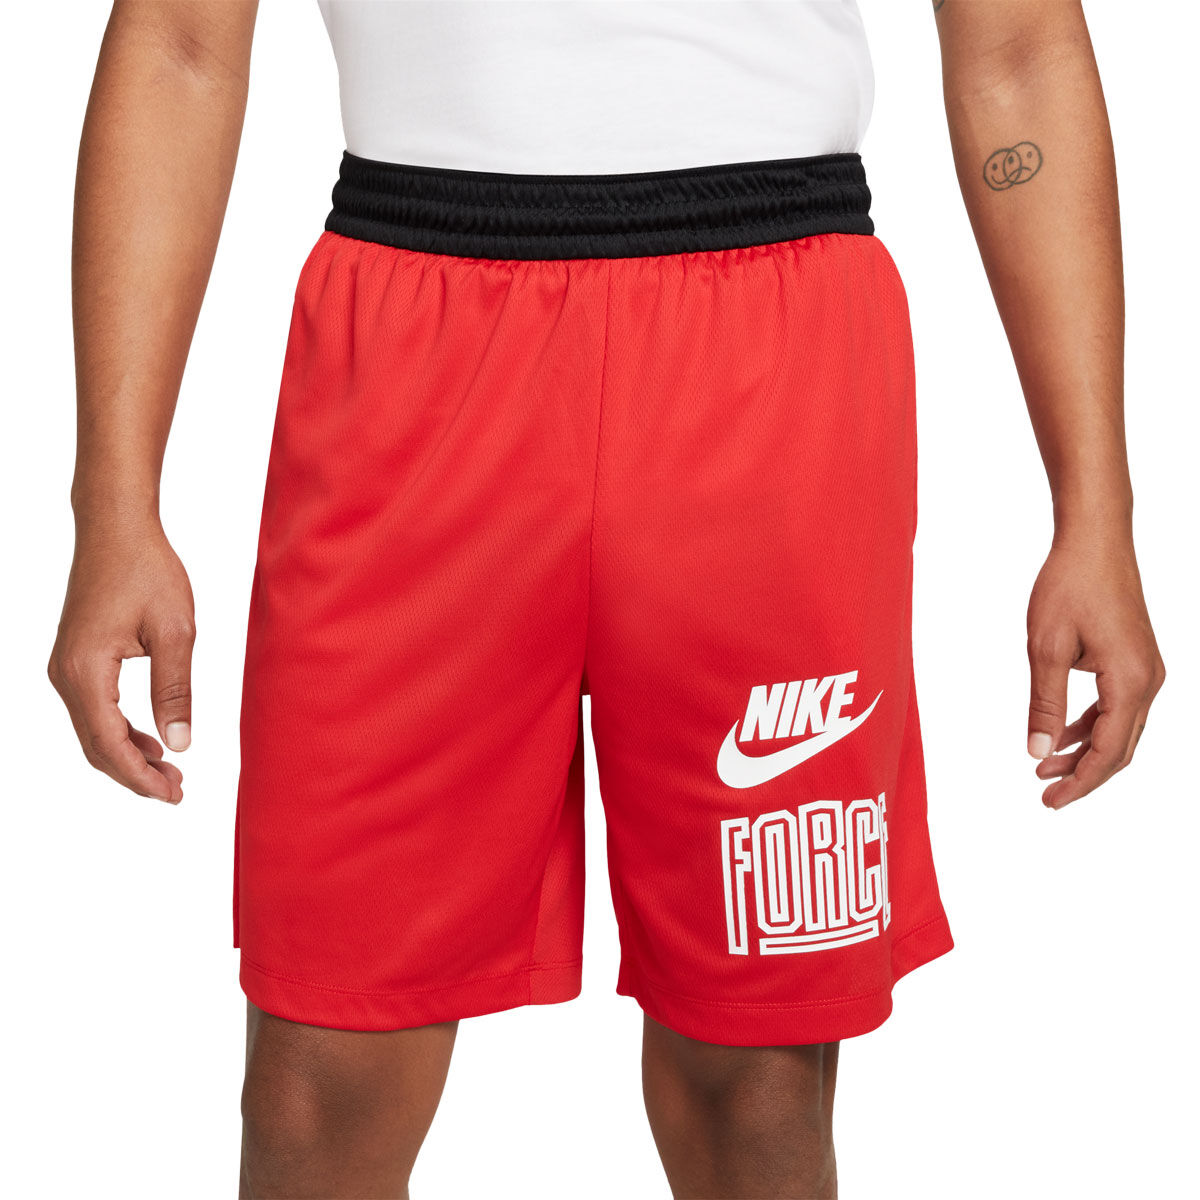 Nike Golden State Warriors Starting 5 Dri-fit Nba Shorts in Blue for Men